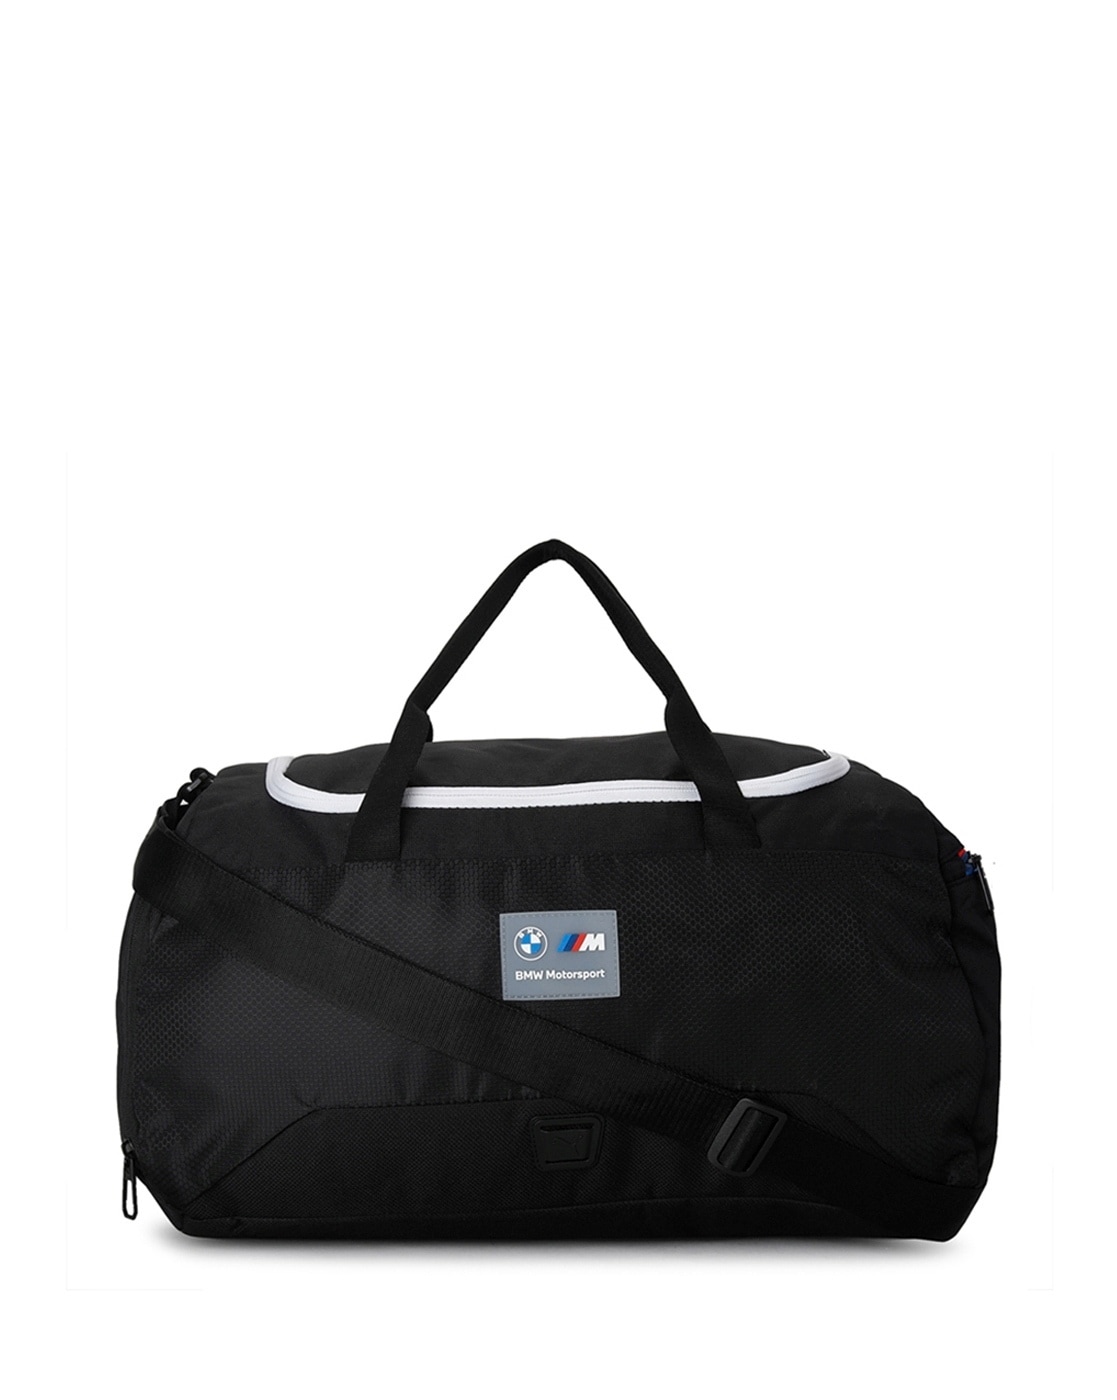 Puma BMW M Motorsport Small Portable Bag | BMW Lifestyle Store